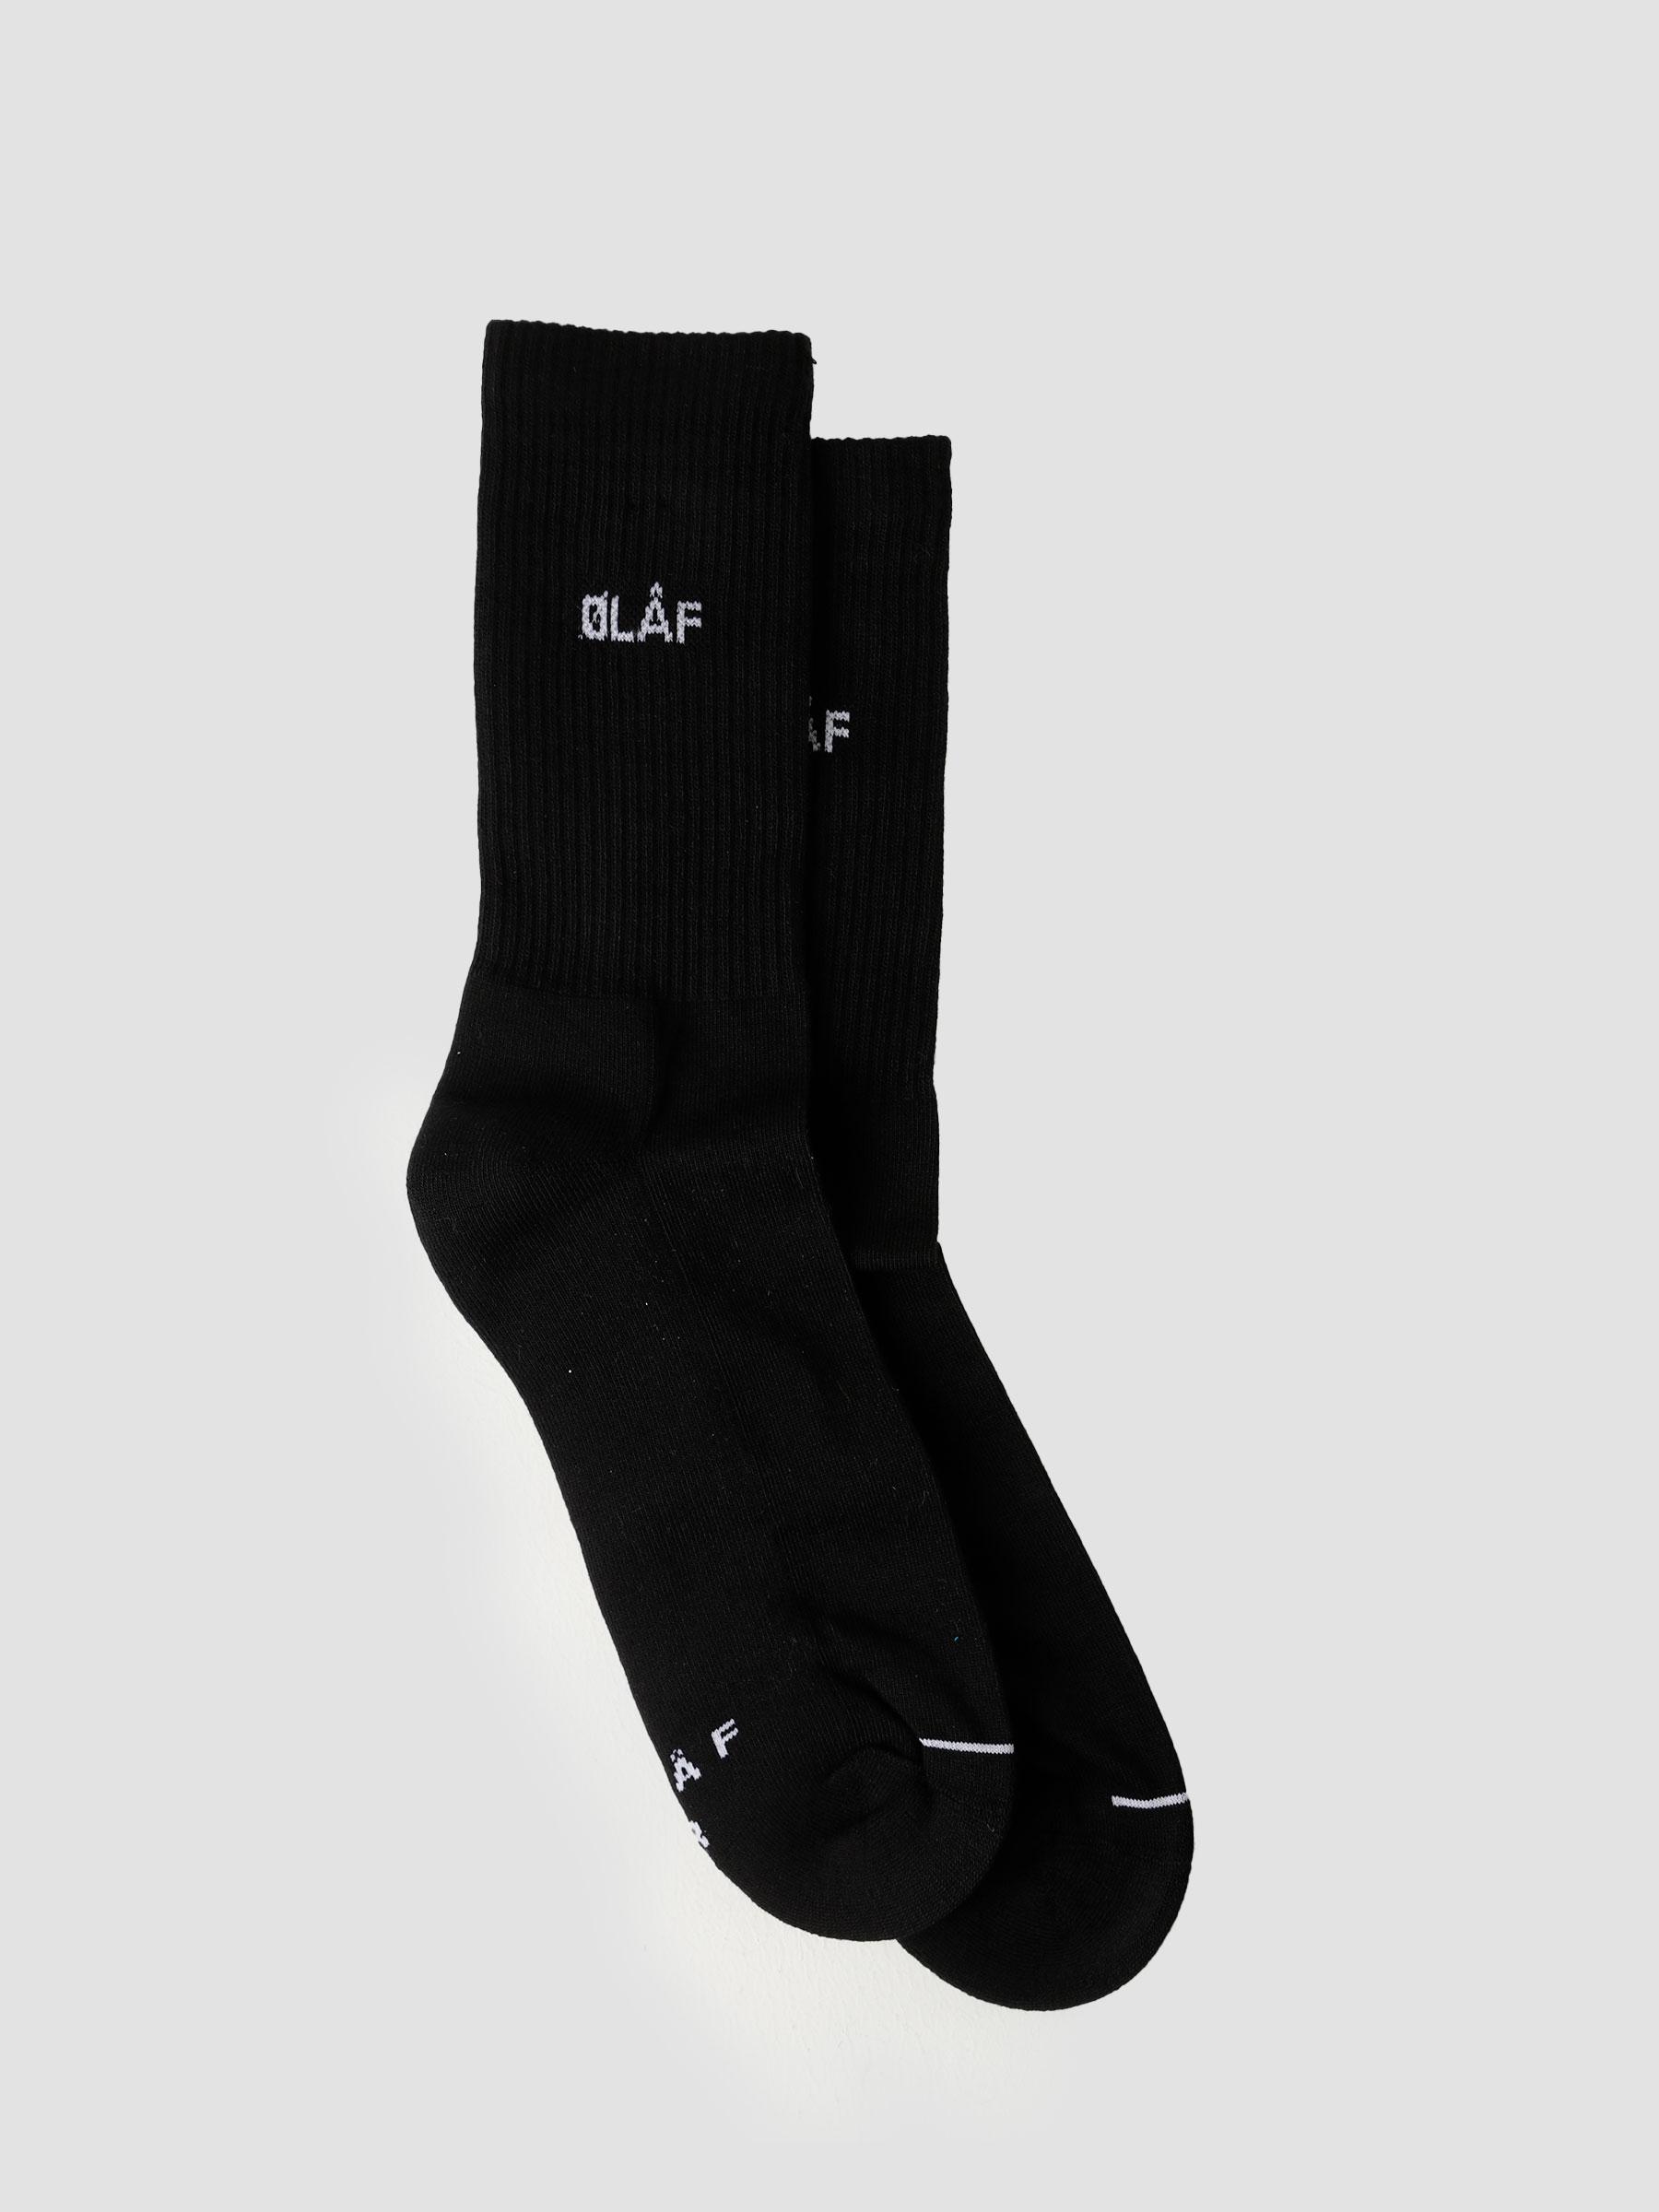 OLAF Mini Logo Socks Black White - Freshcotton